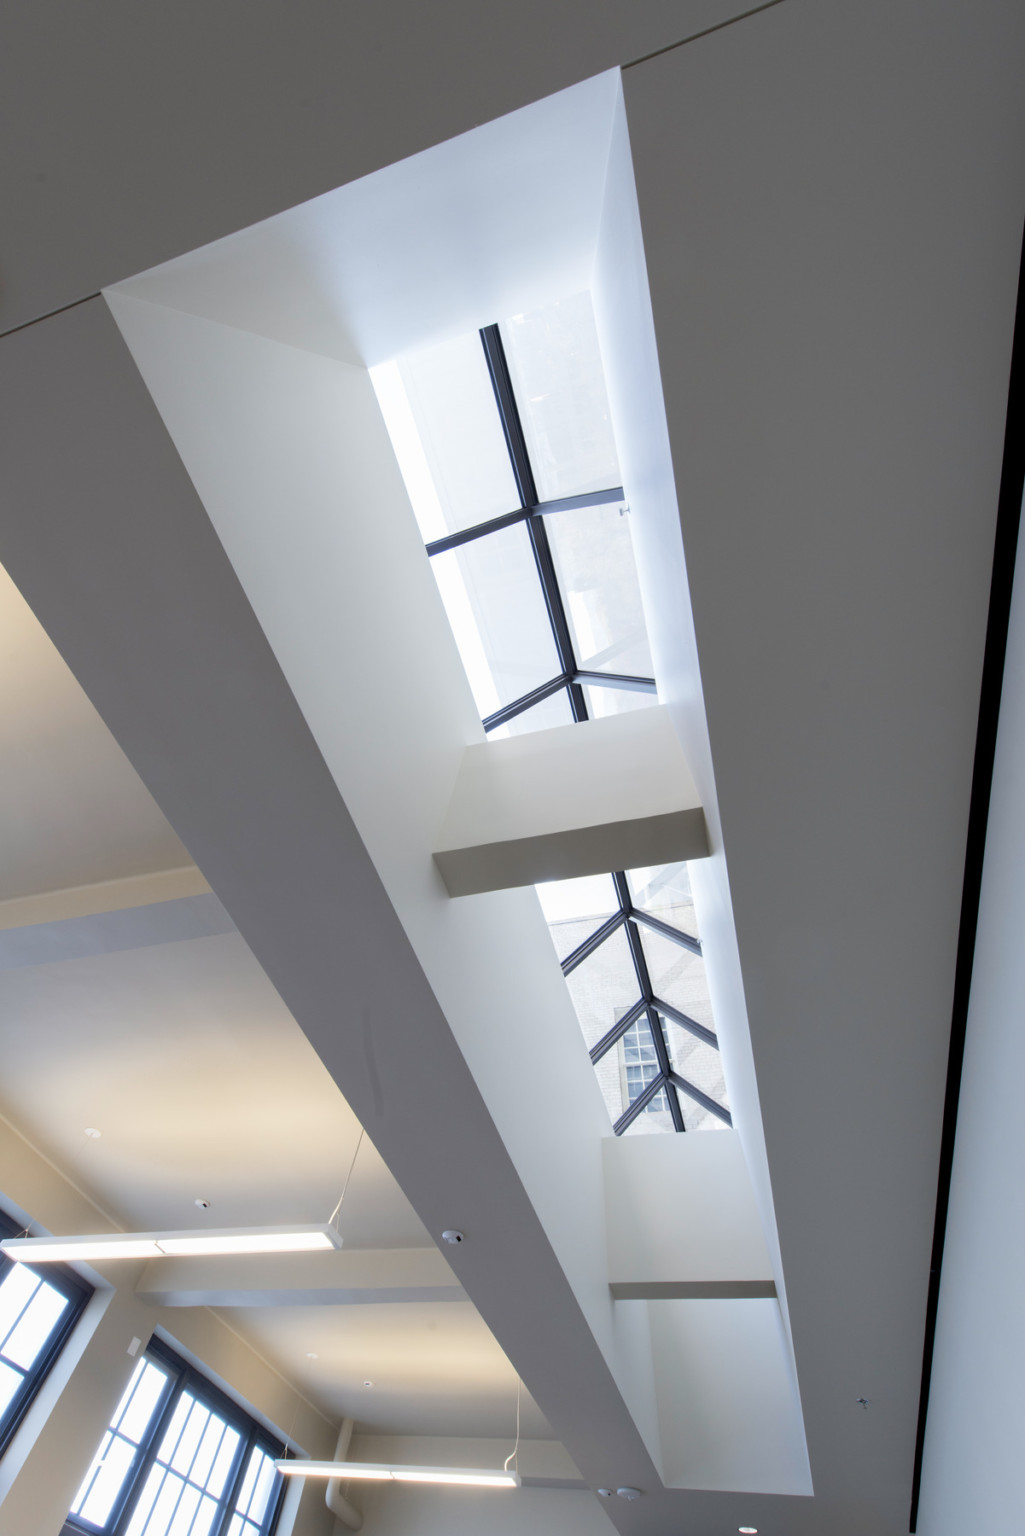 Skylight between 2 connected parallel grey beams